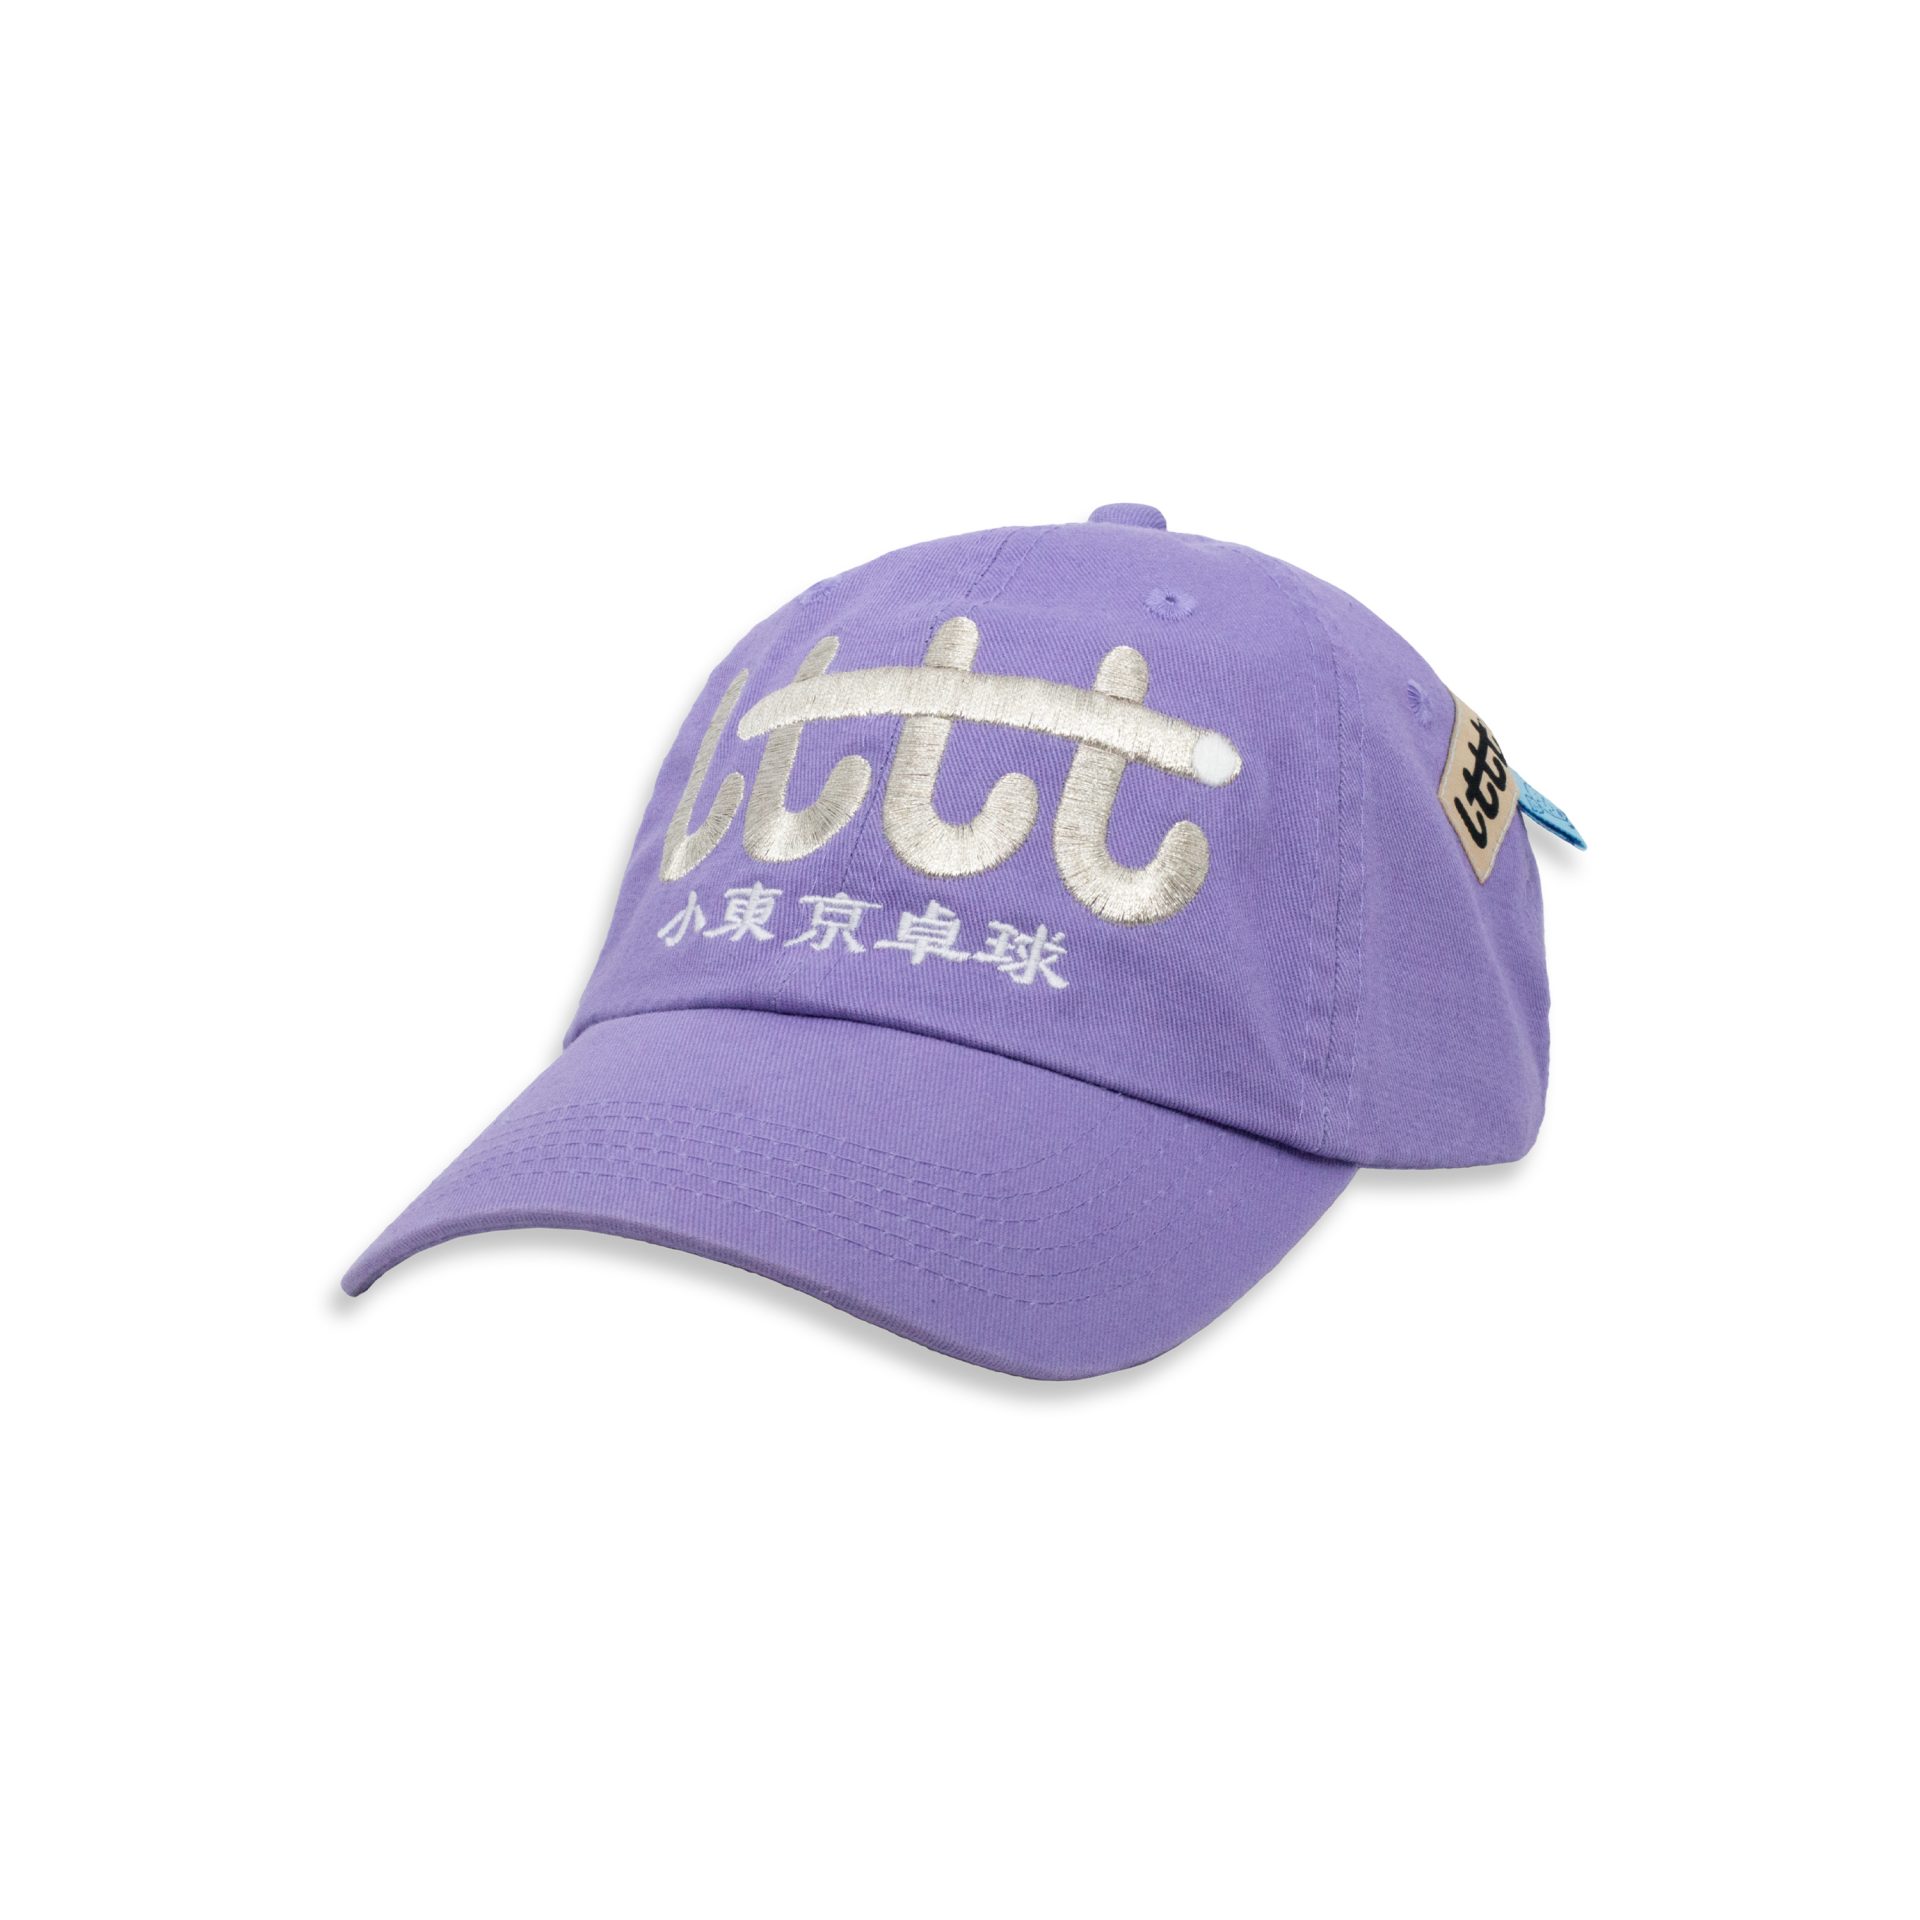 LTTT リトル東京卓球  小東京卓球  キャップ 帽子